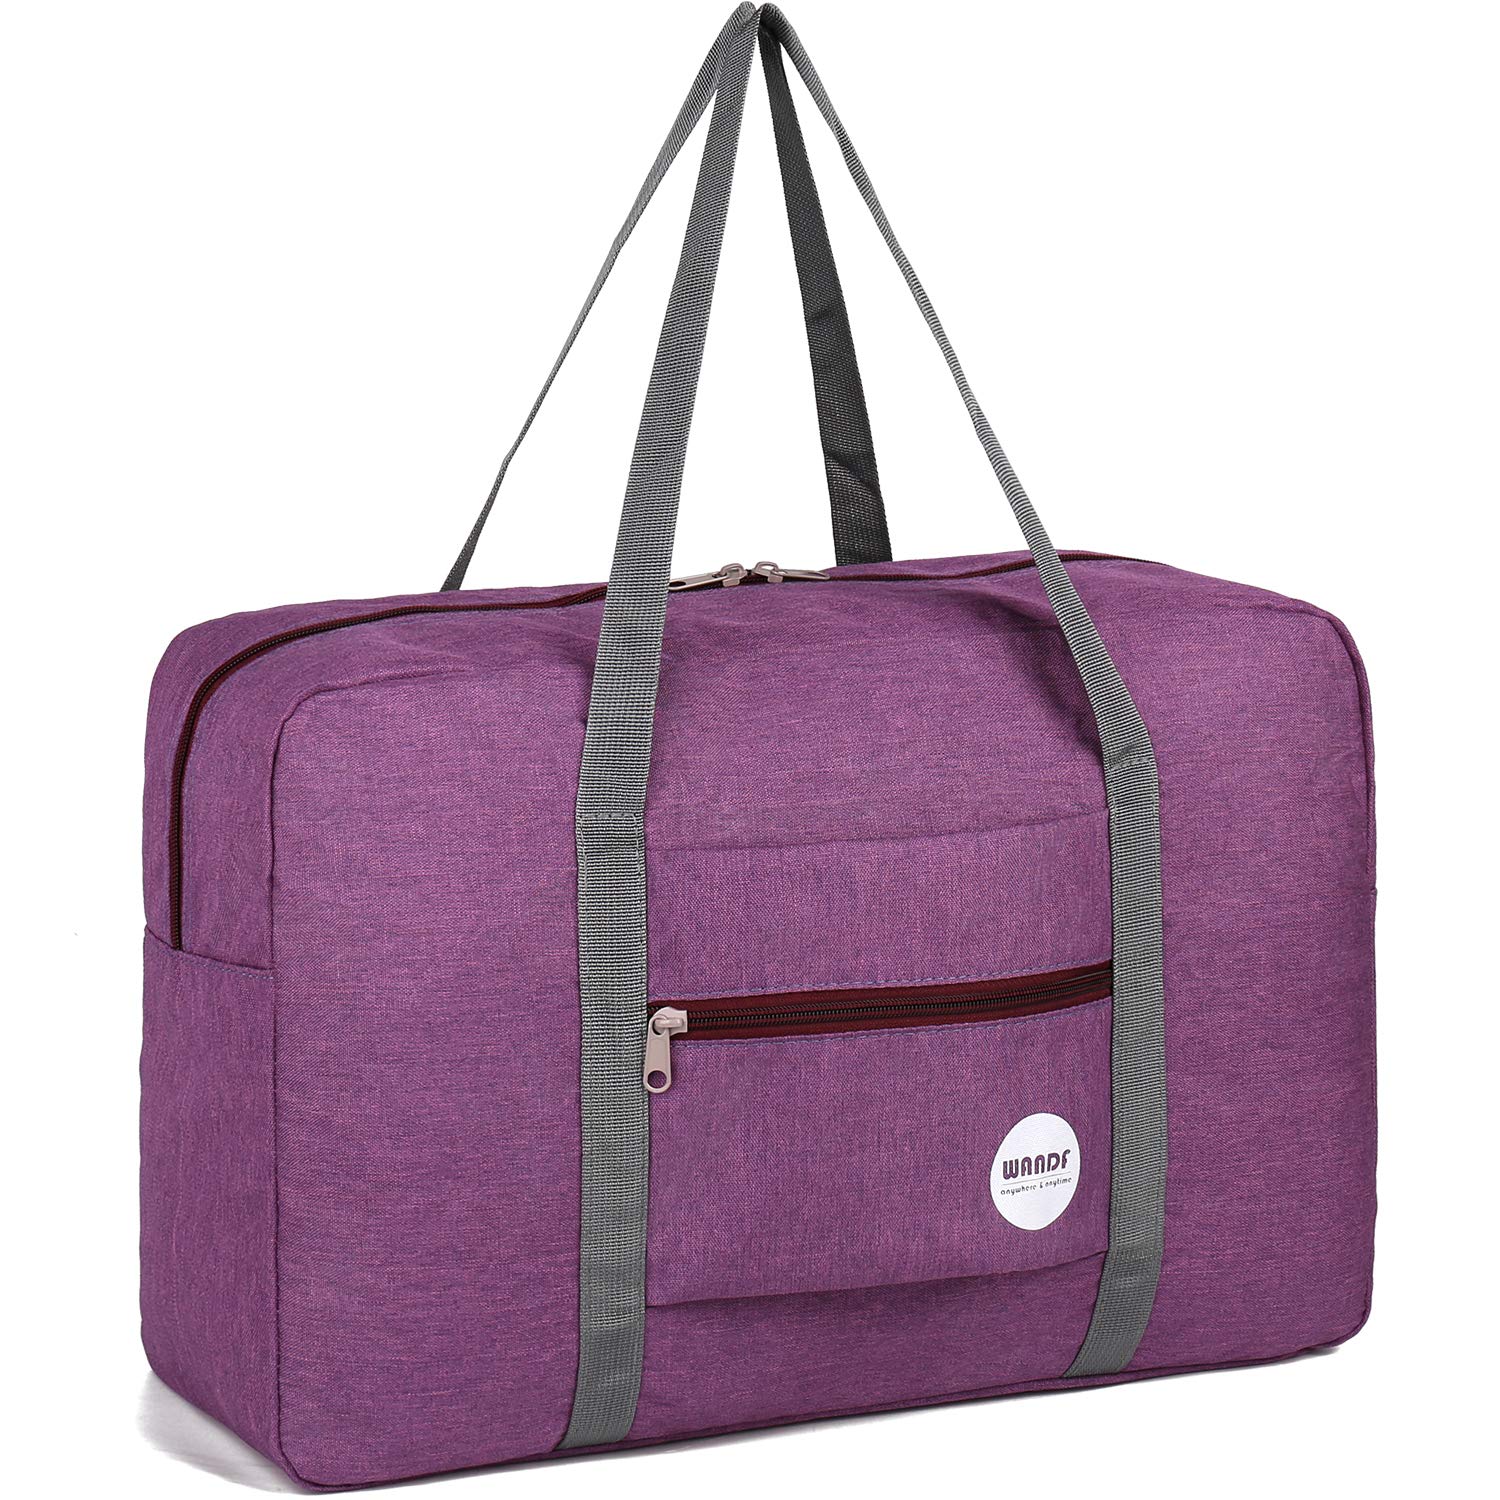 WANDF + Foldable Travel Duffel Bag